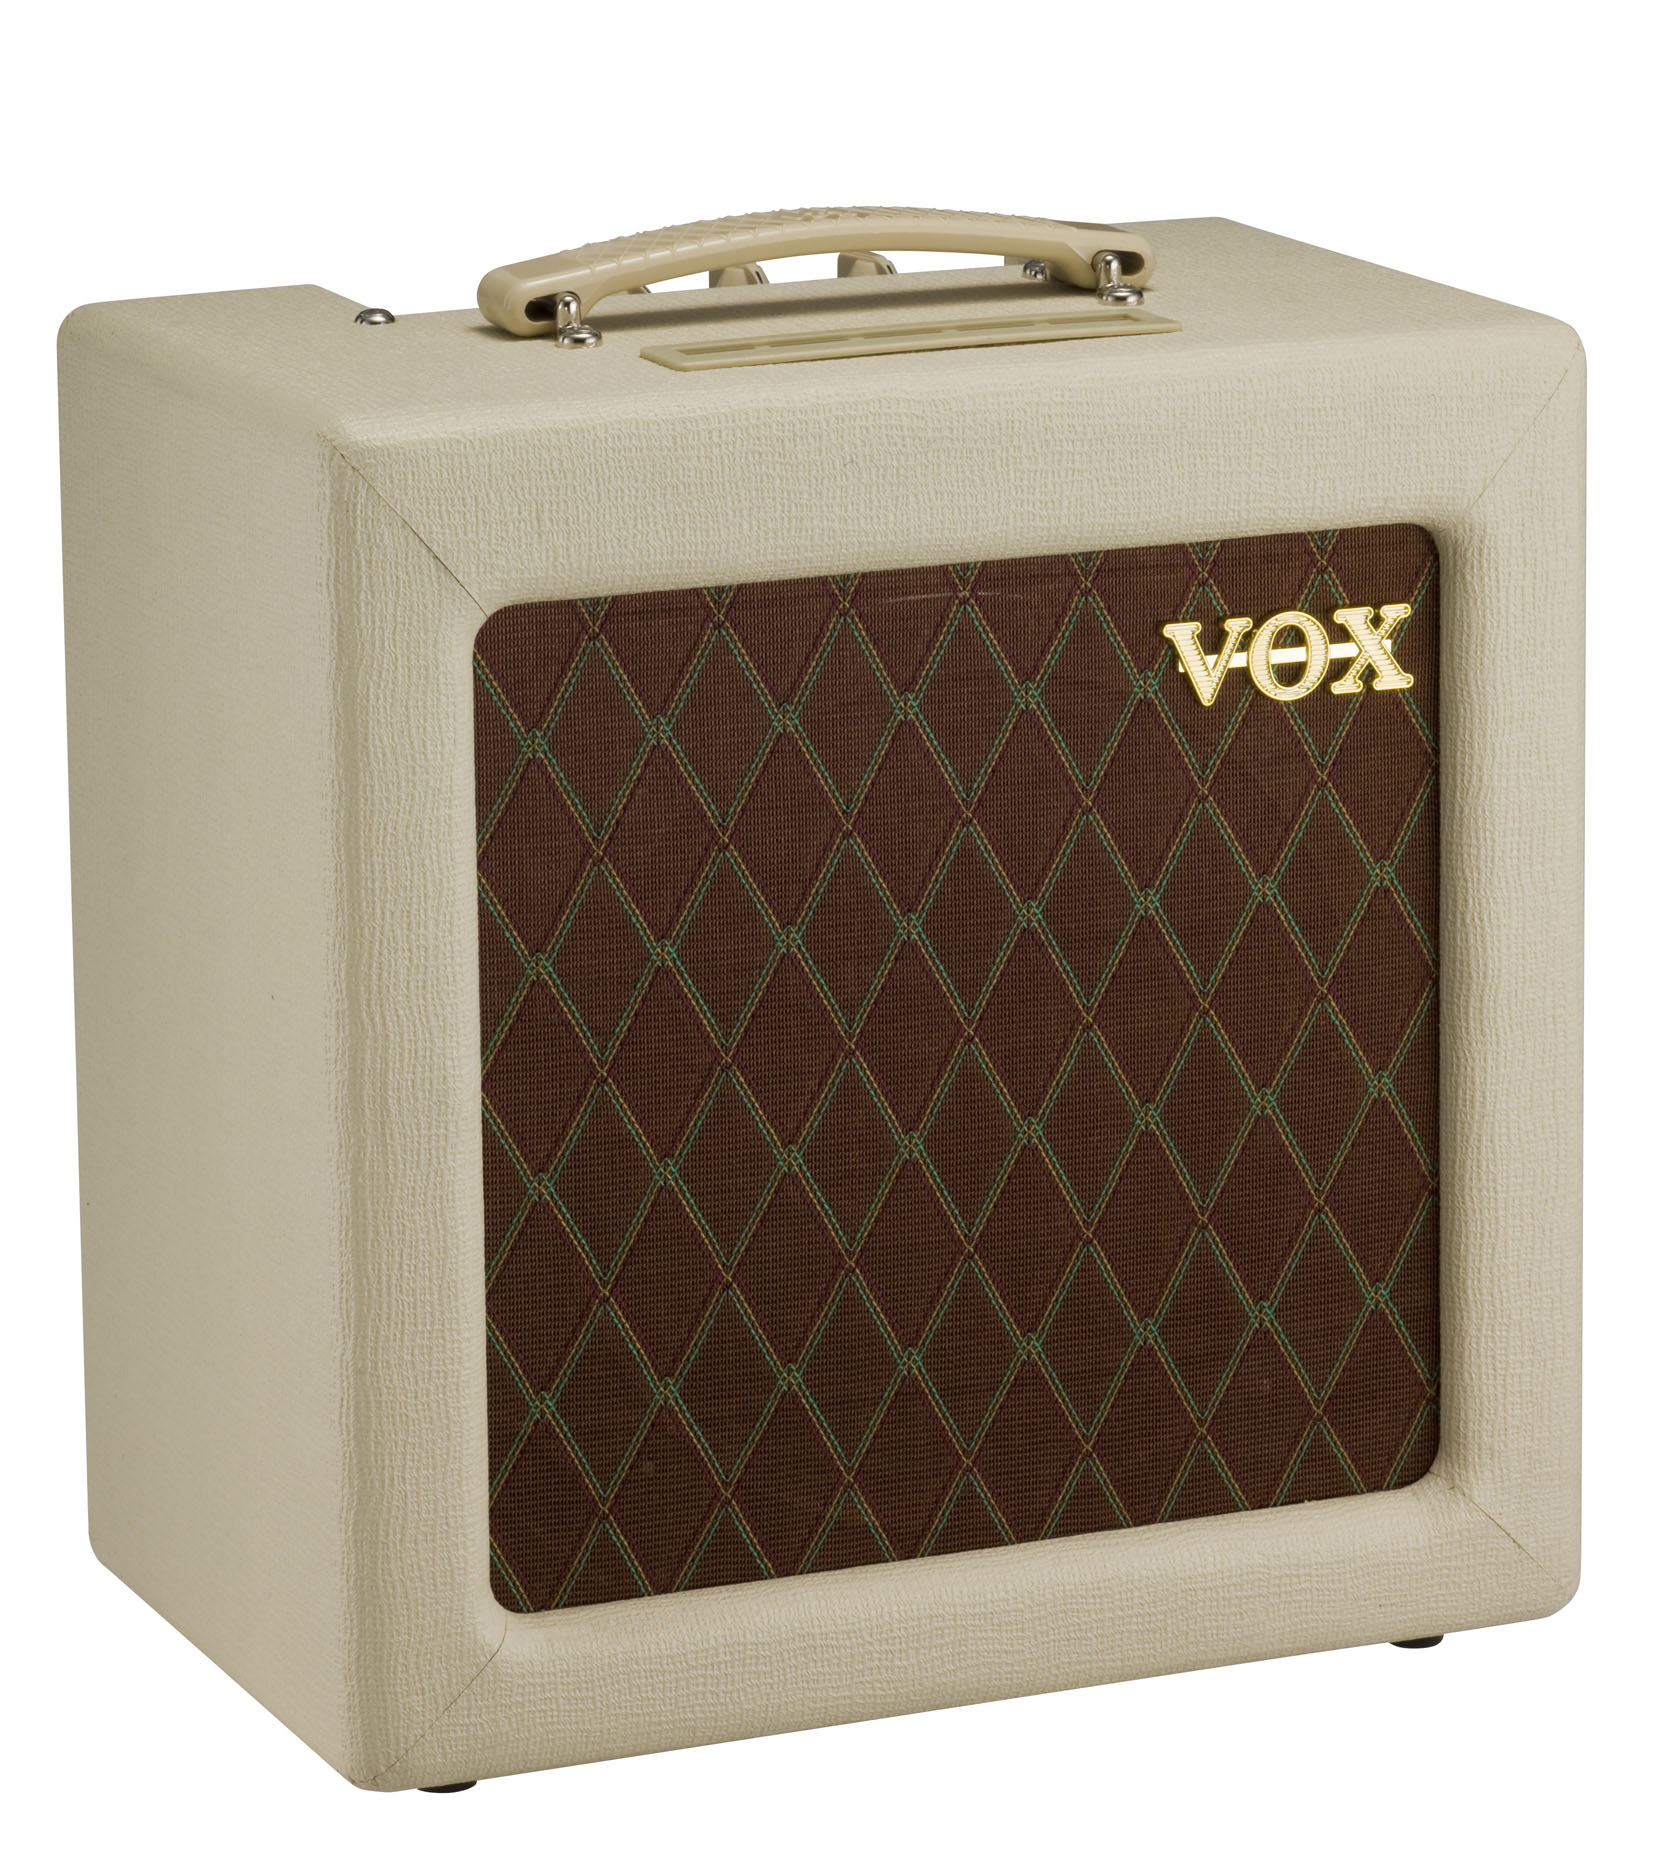 Vox Vox AC4TV Modern Classic Guitar Amp